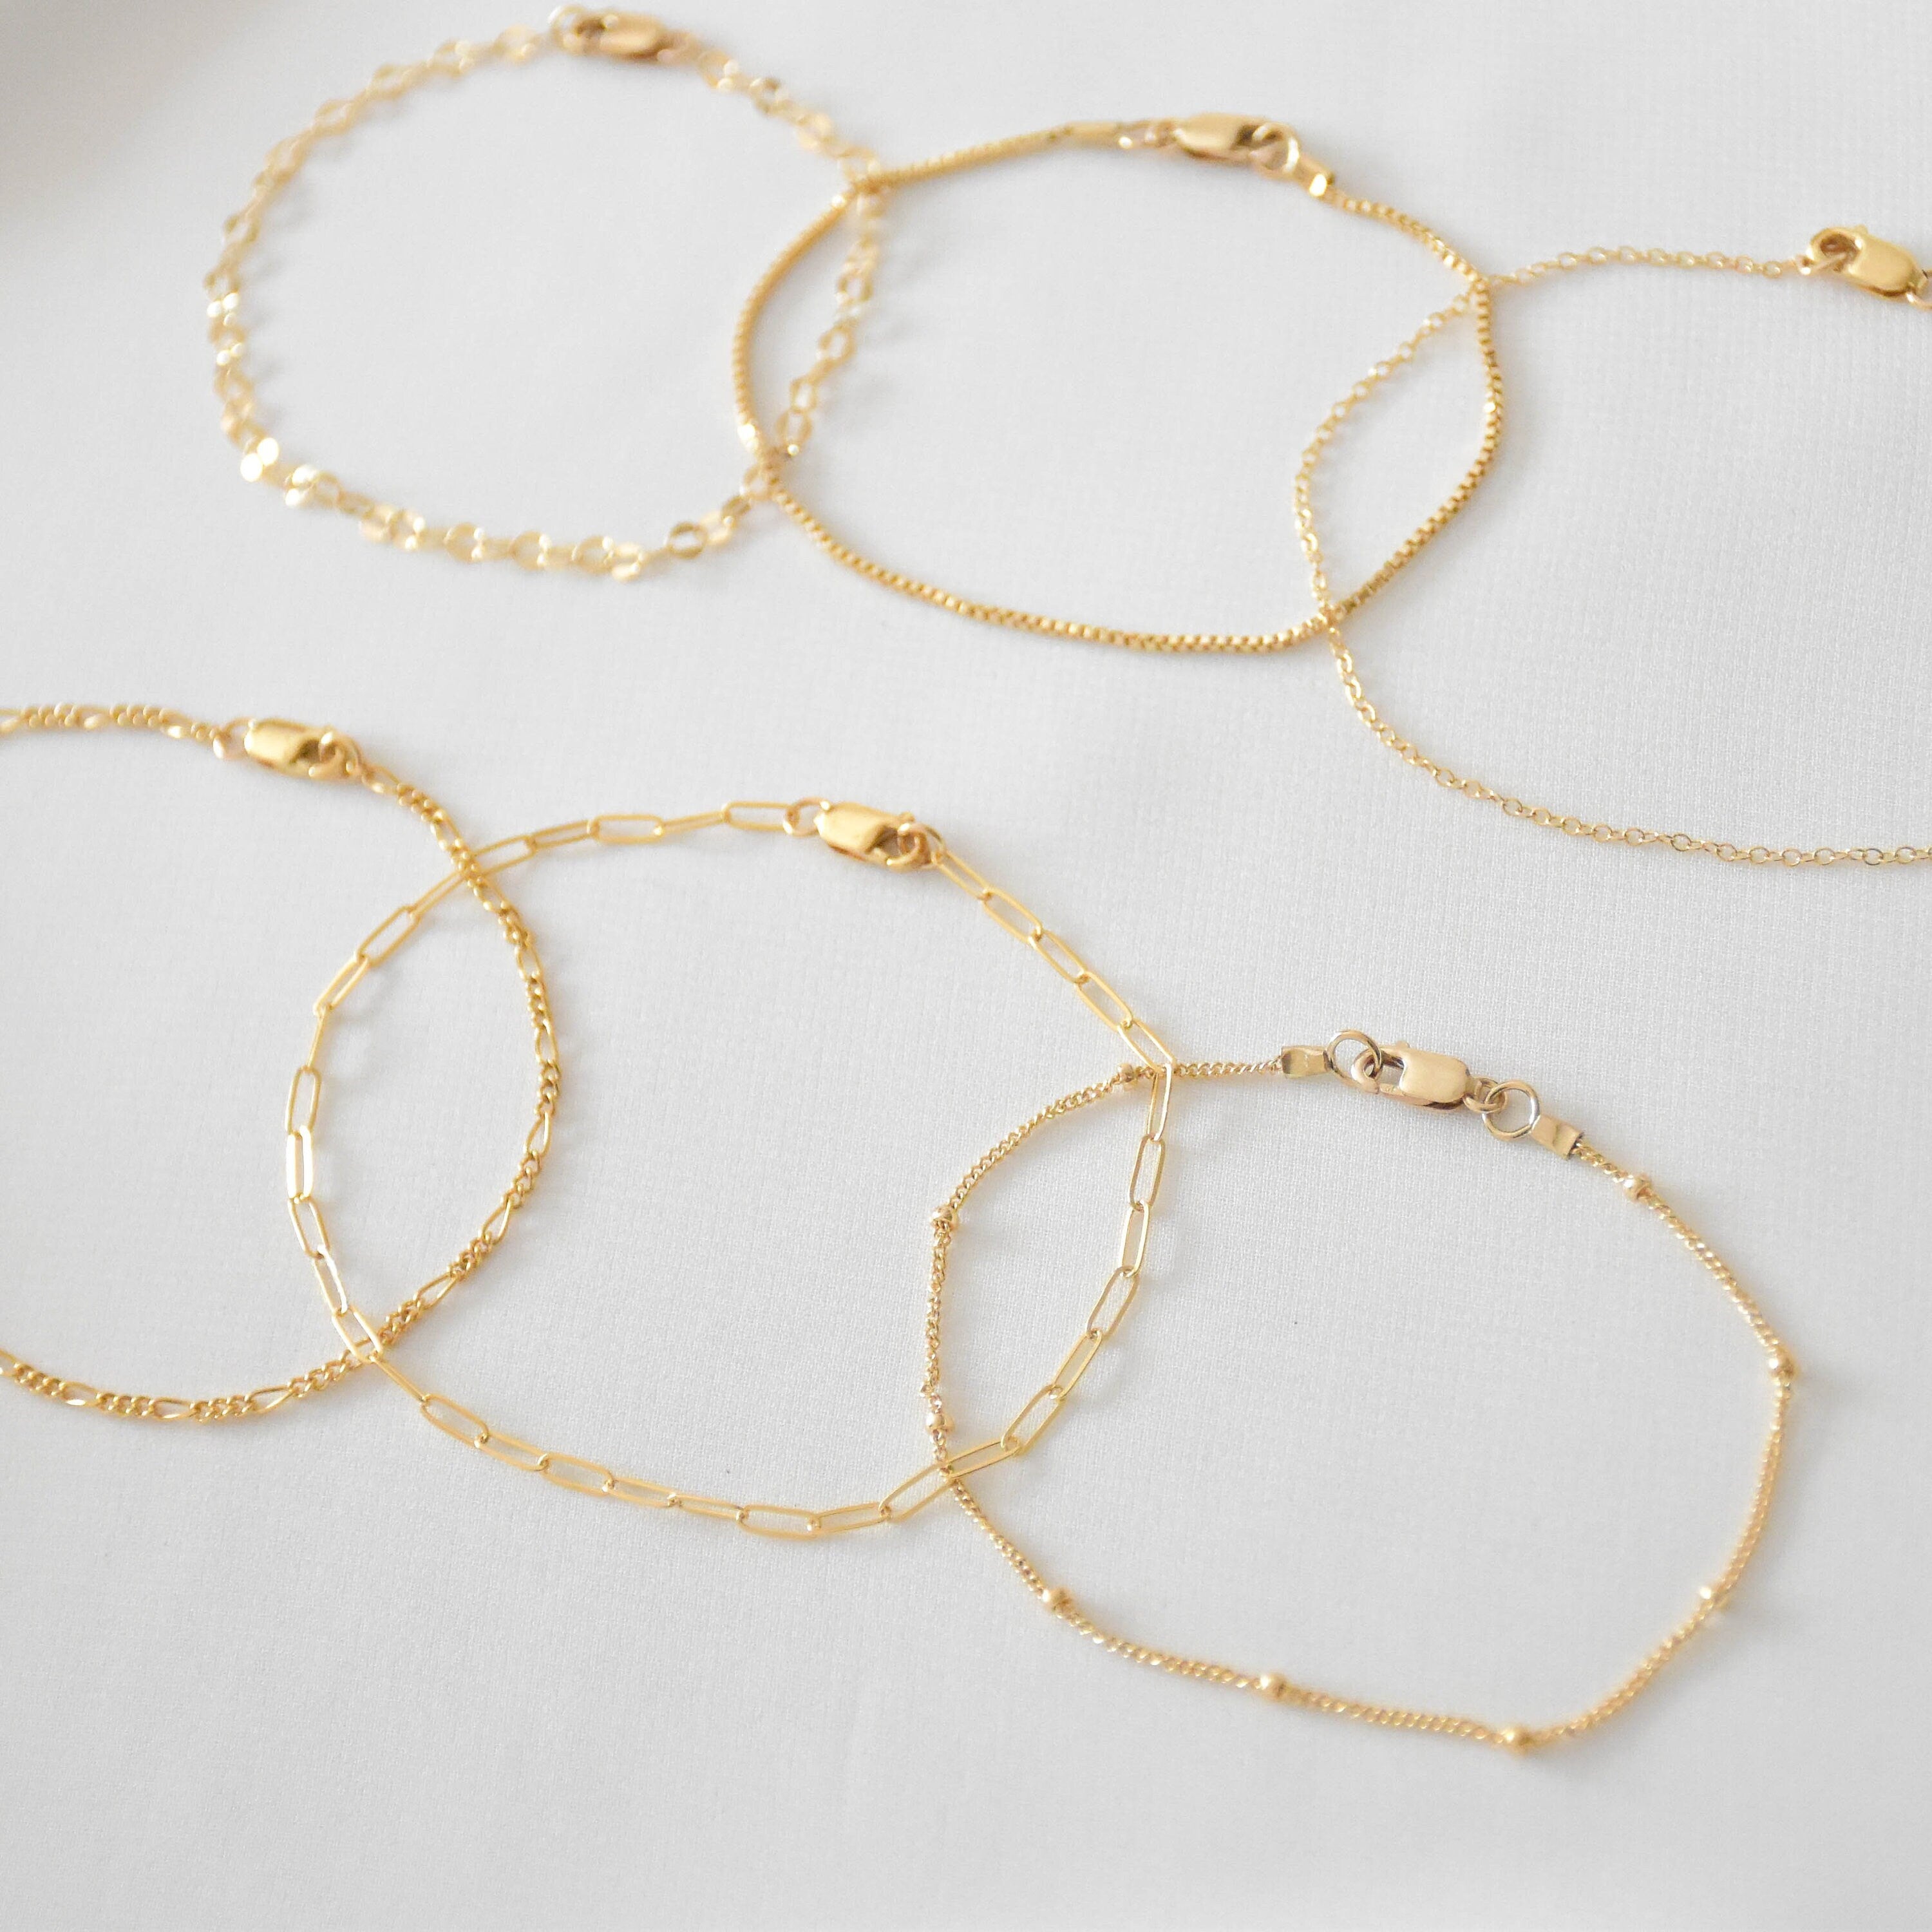 Single Chain Bracelet - gold filled bracelet, chain bracelets, gold chain bracelet, chain bracelet set, simple bracelet, gold bracelet |GFB00009